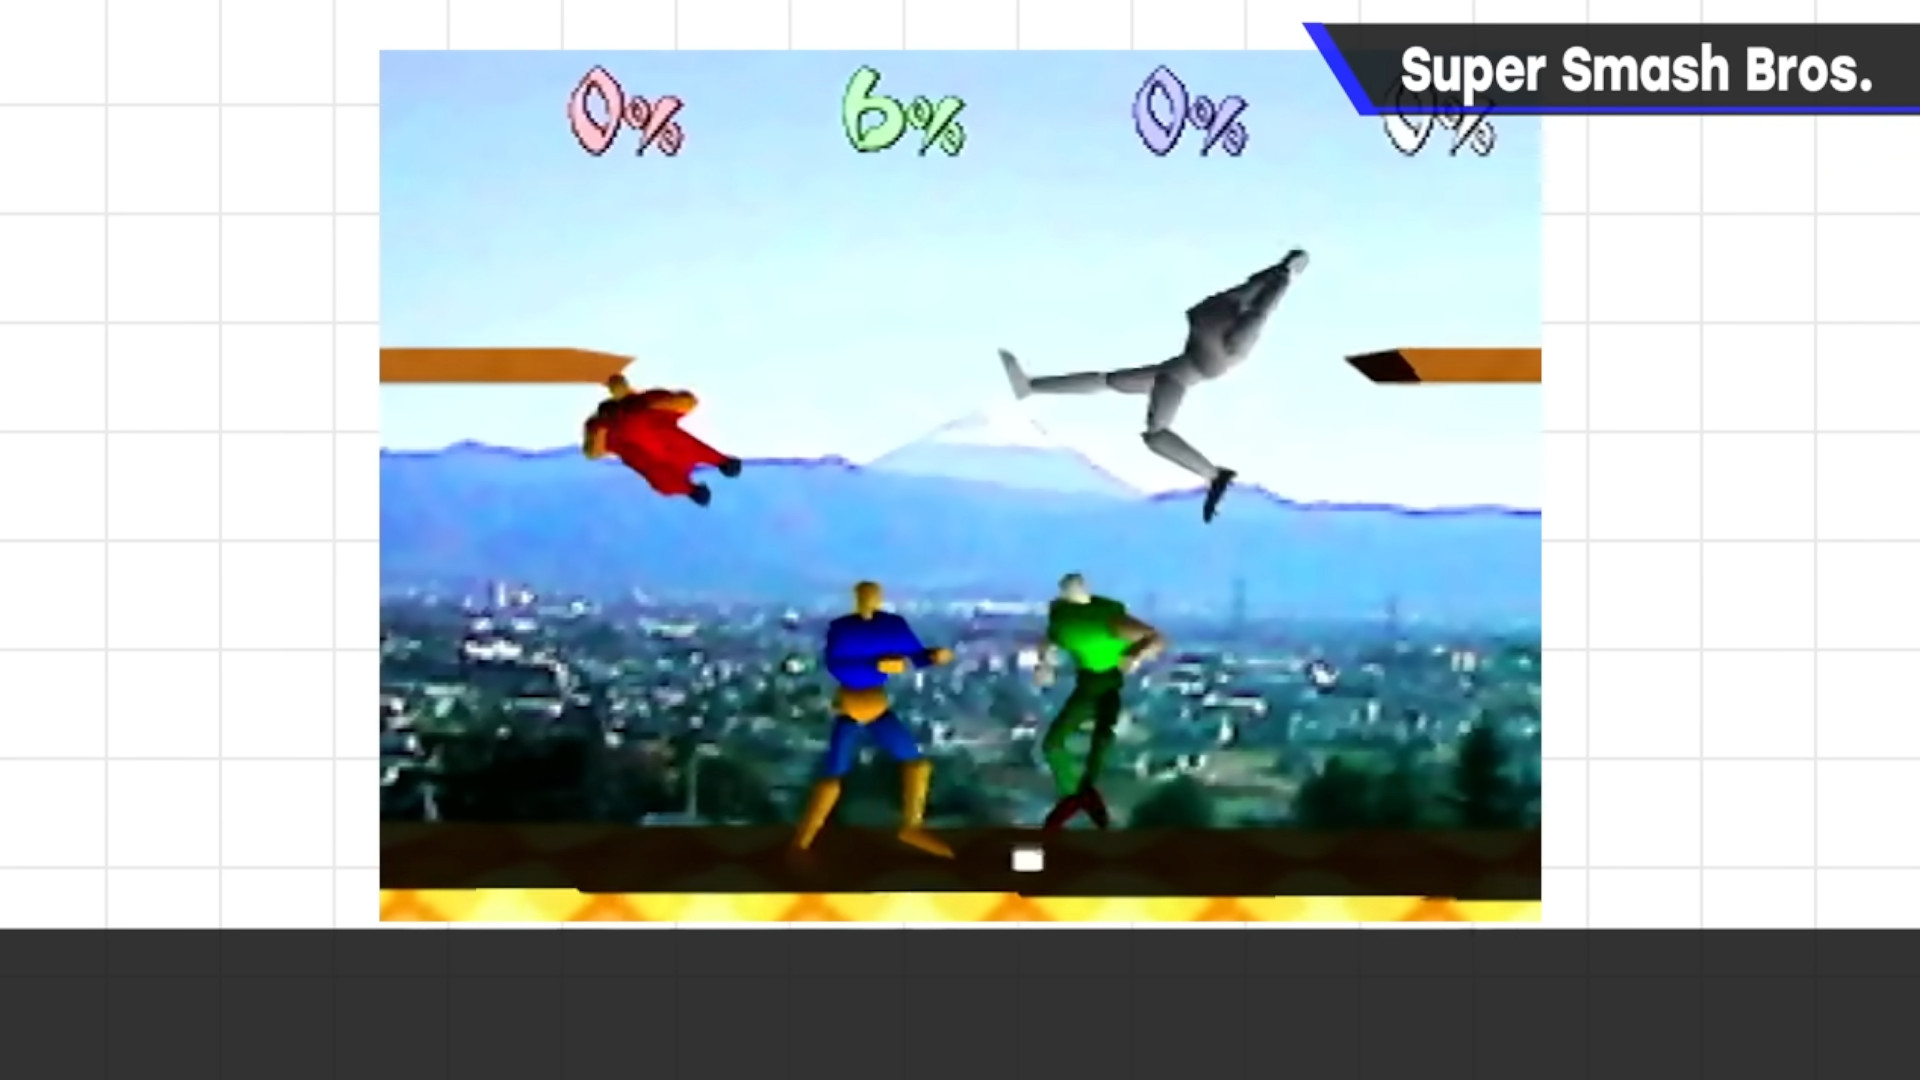 Super Smash Bros. prototype Dragon King: The Fighting Game